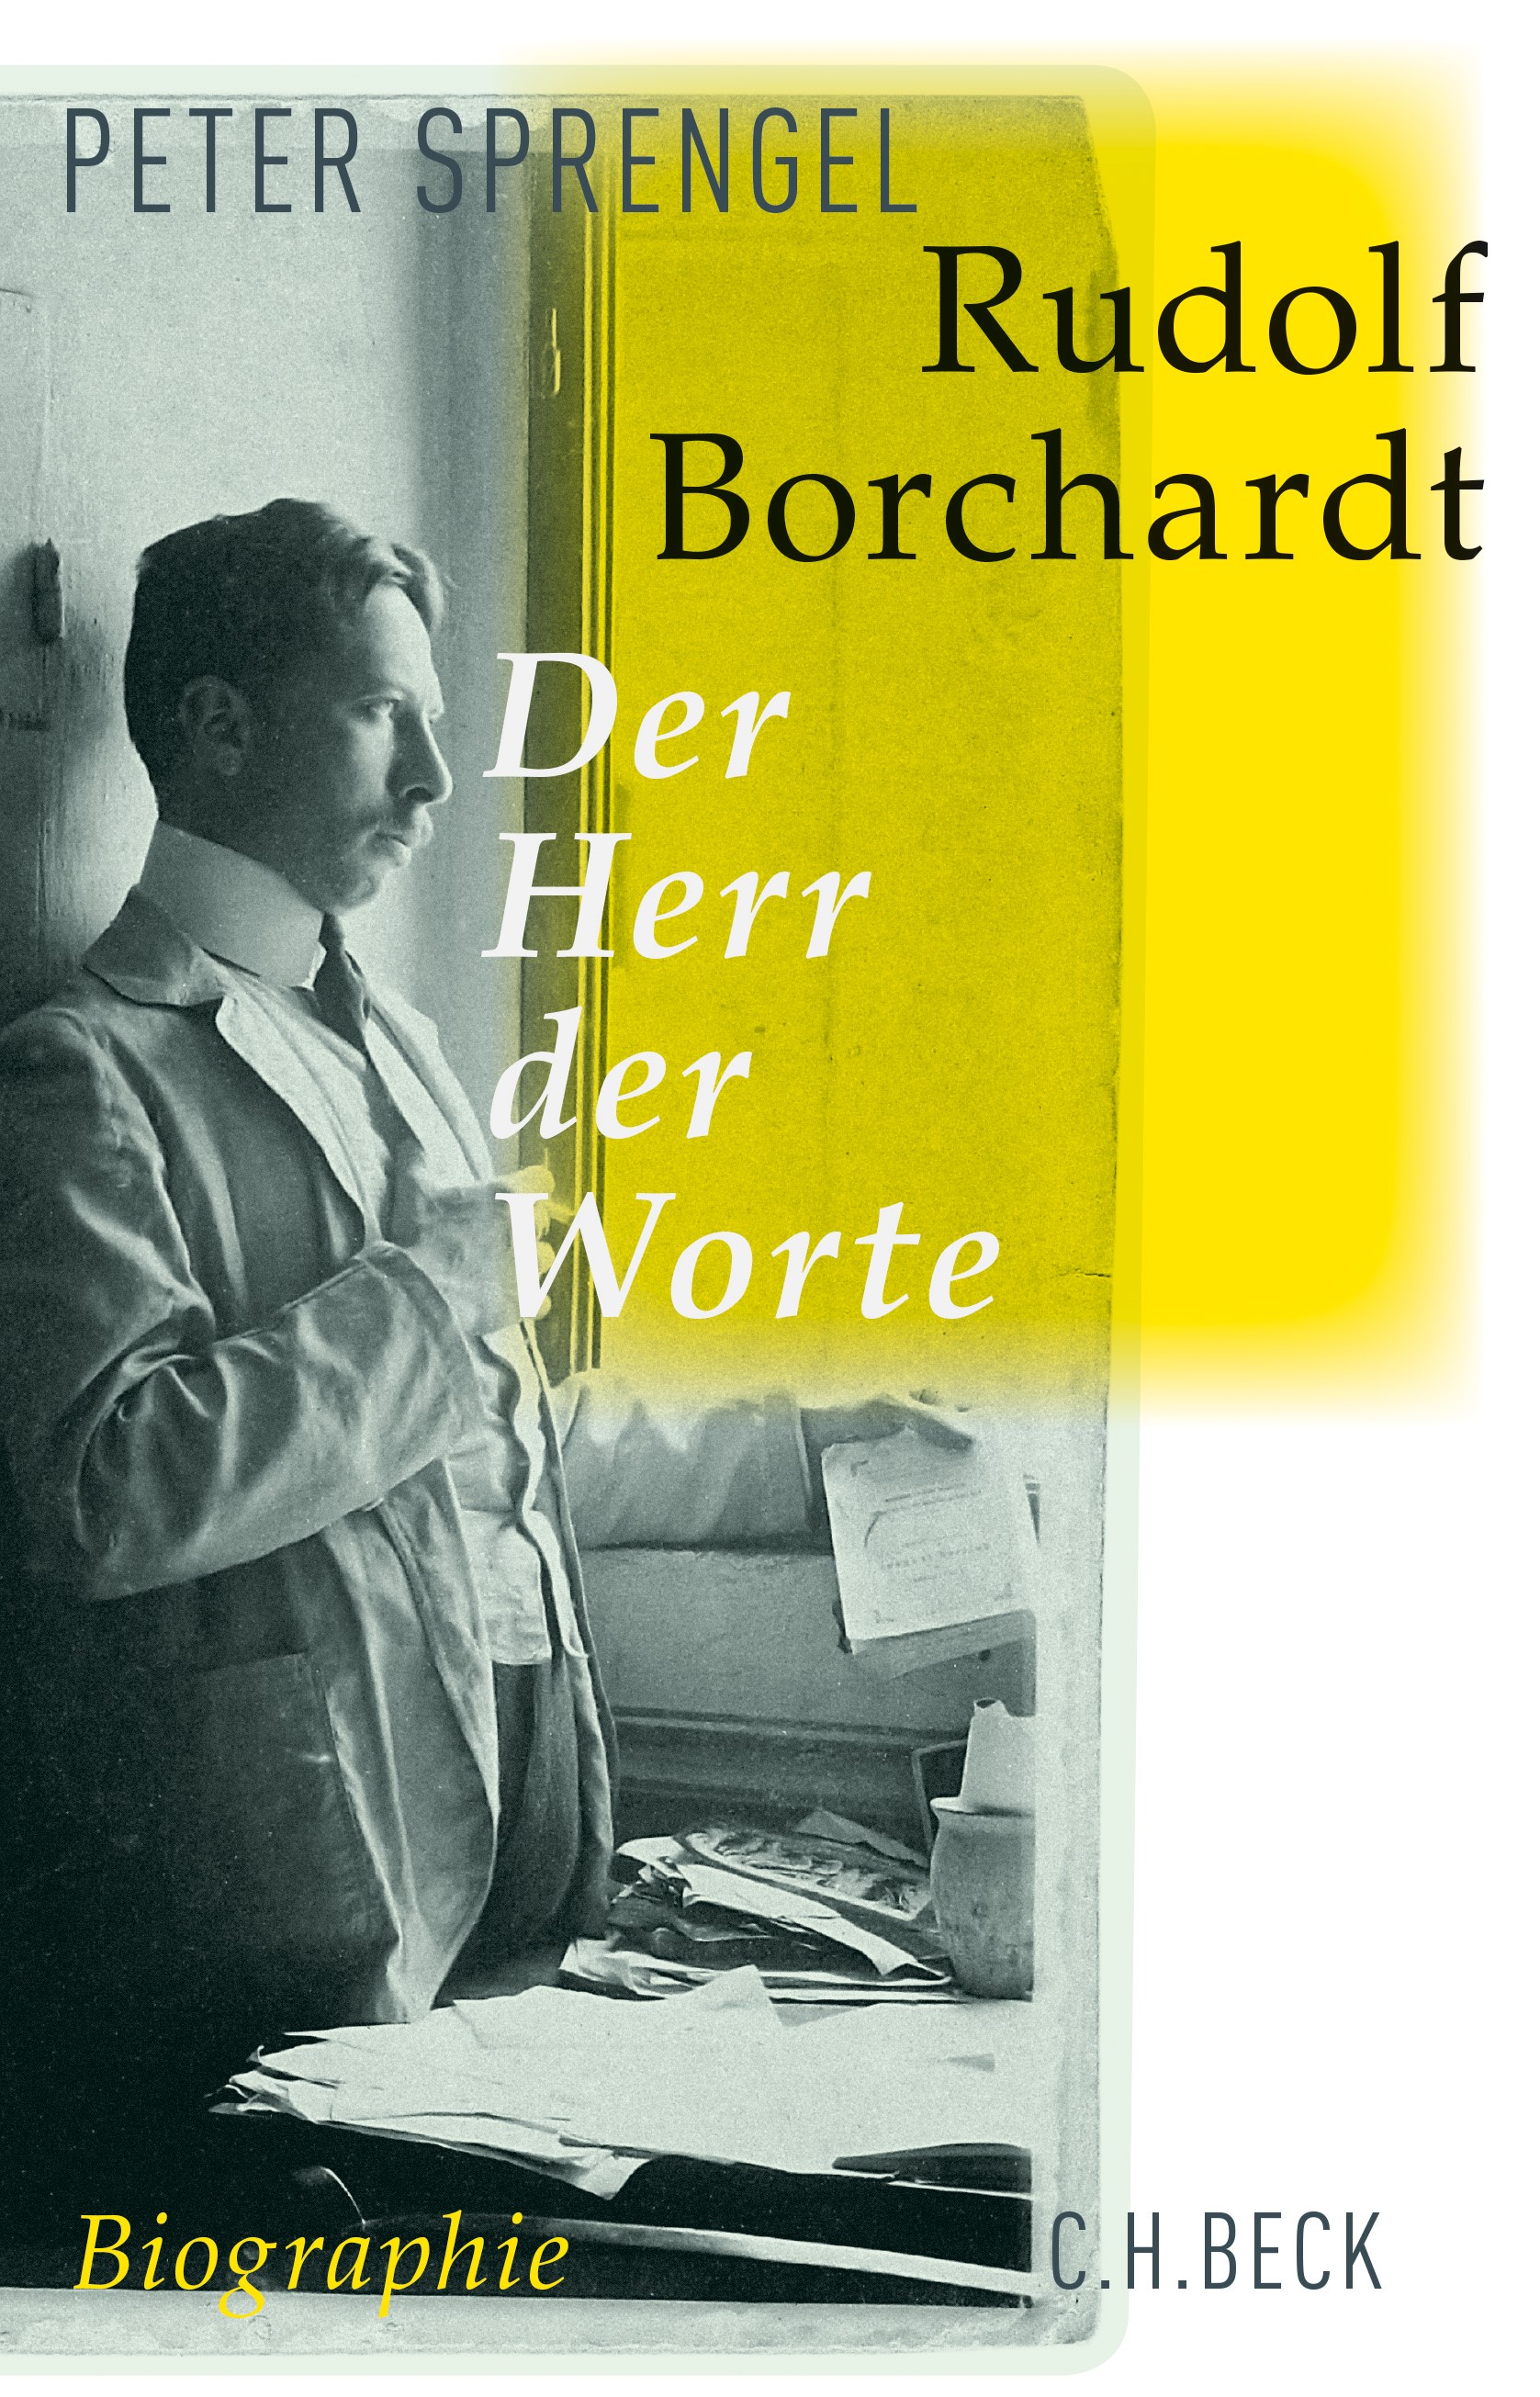 Cover: Sprengel, Peter, Rudolf Borchardt